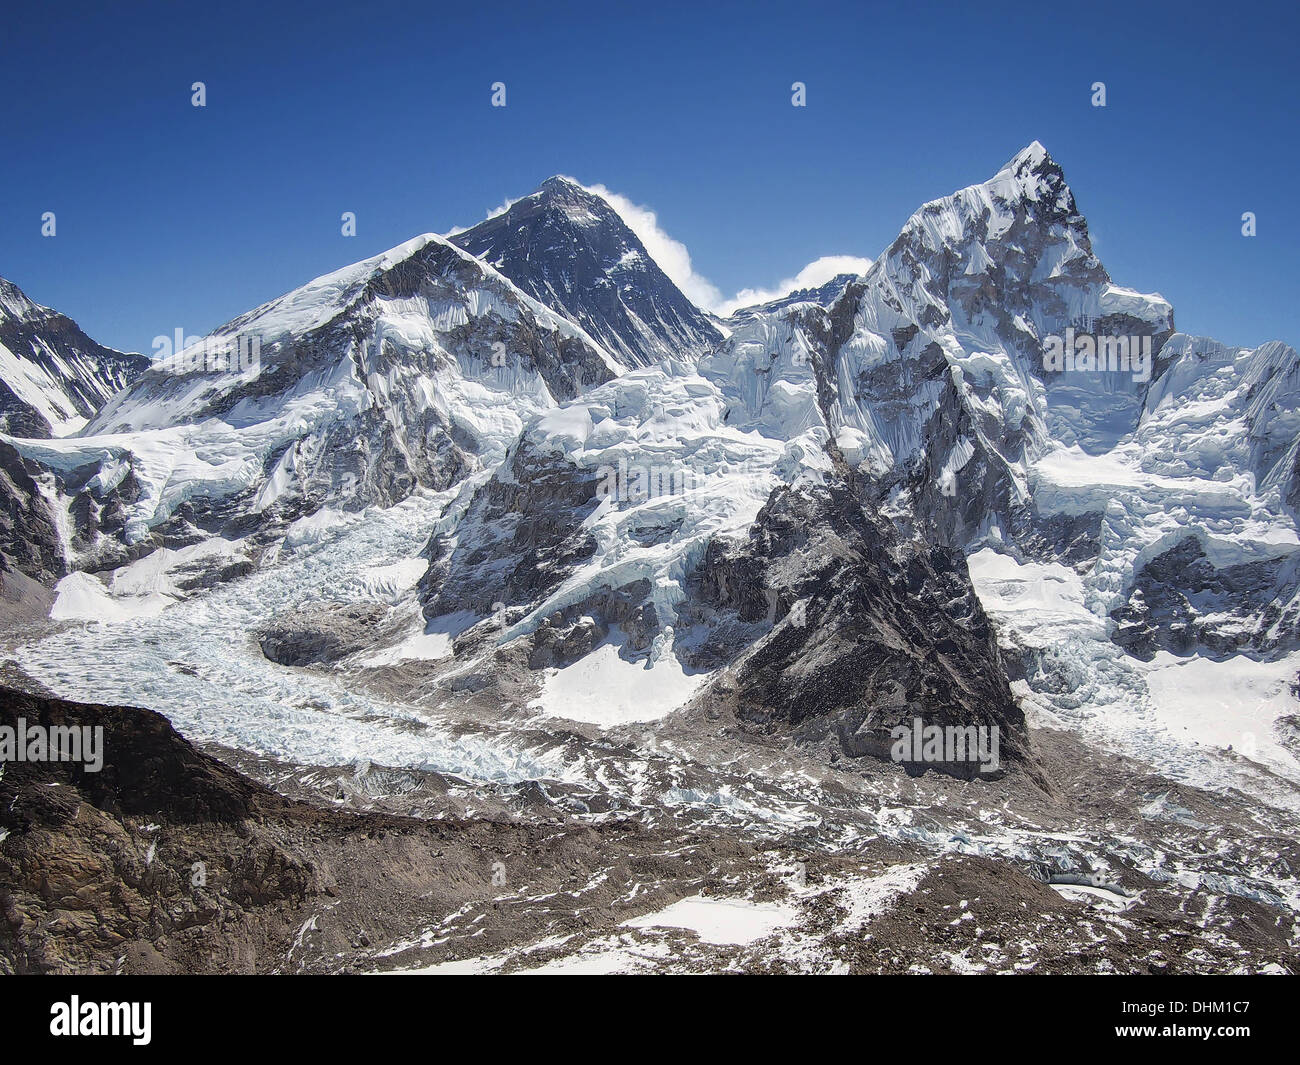 Mount Everest, Nuptse and the Khumbu Icefall seen from Kala Patthar, Khumbu Region, Nepal. Stock Photo